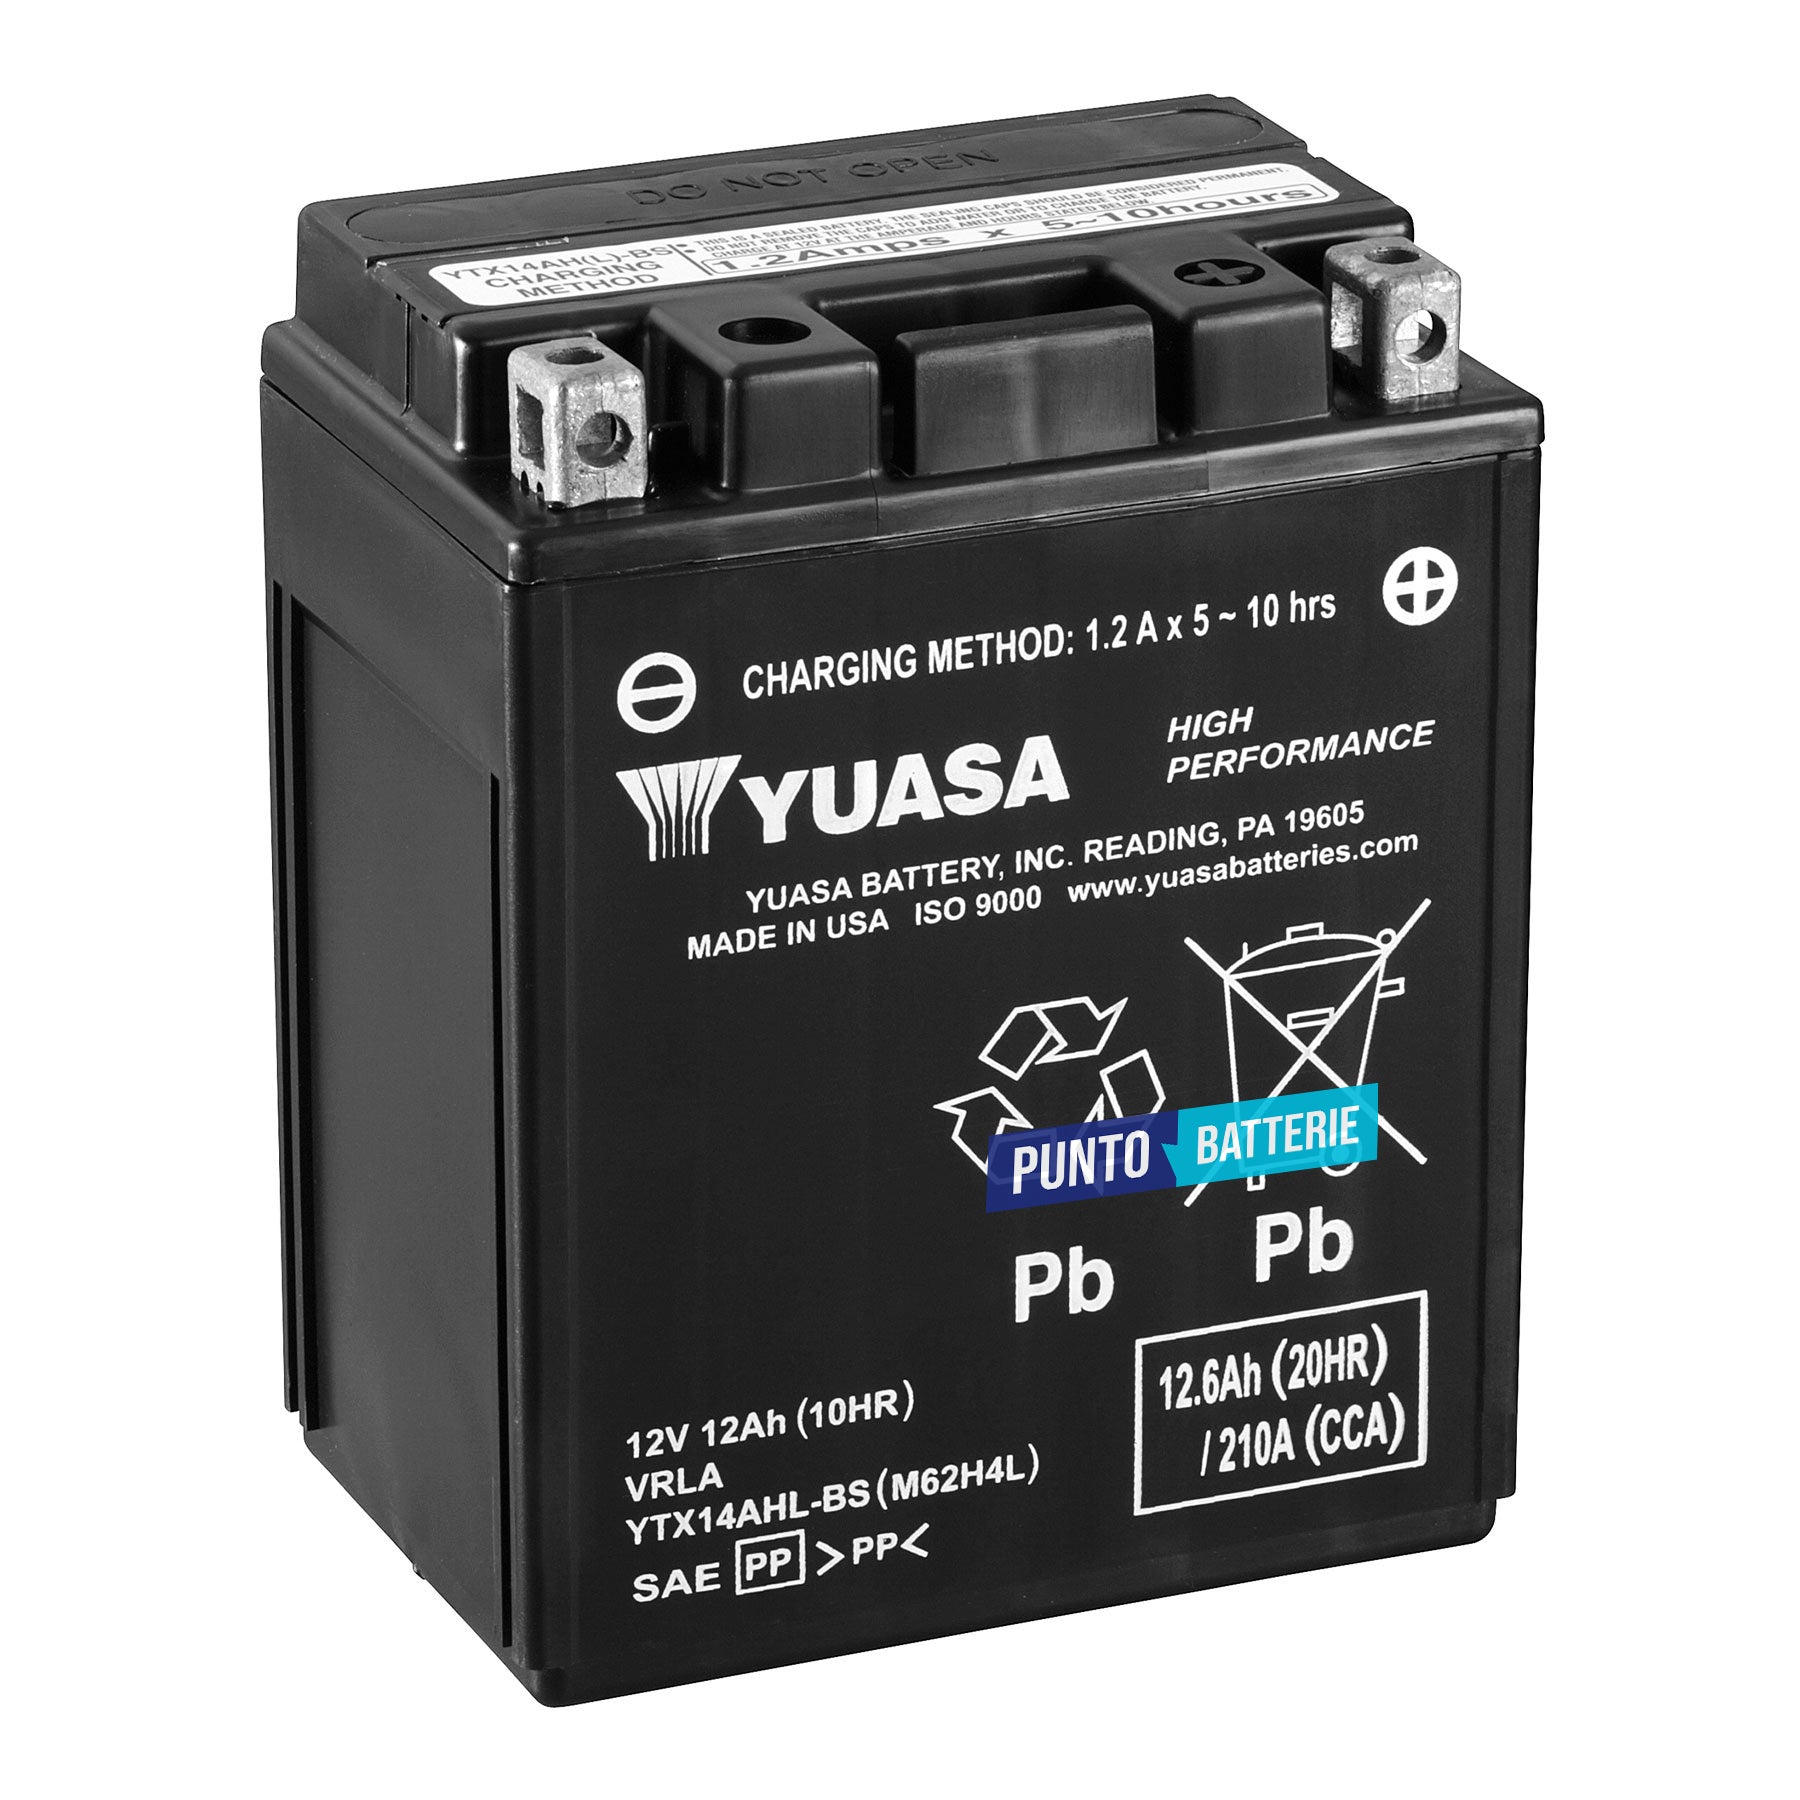 Batteria originale Yuasa YTX High Performance YTX14AHL-BS, dimensioni 134 x 89 x 166, polo positivo a destra, 12 volt, 12 amperora, 210 ampere. Batteria per moto, scooter e powersport.